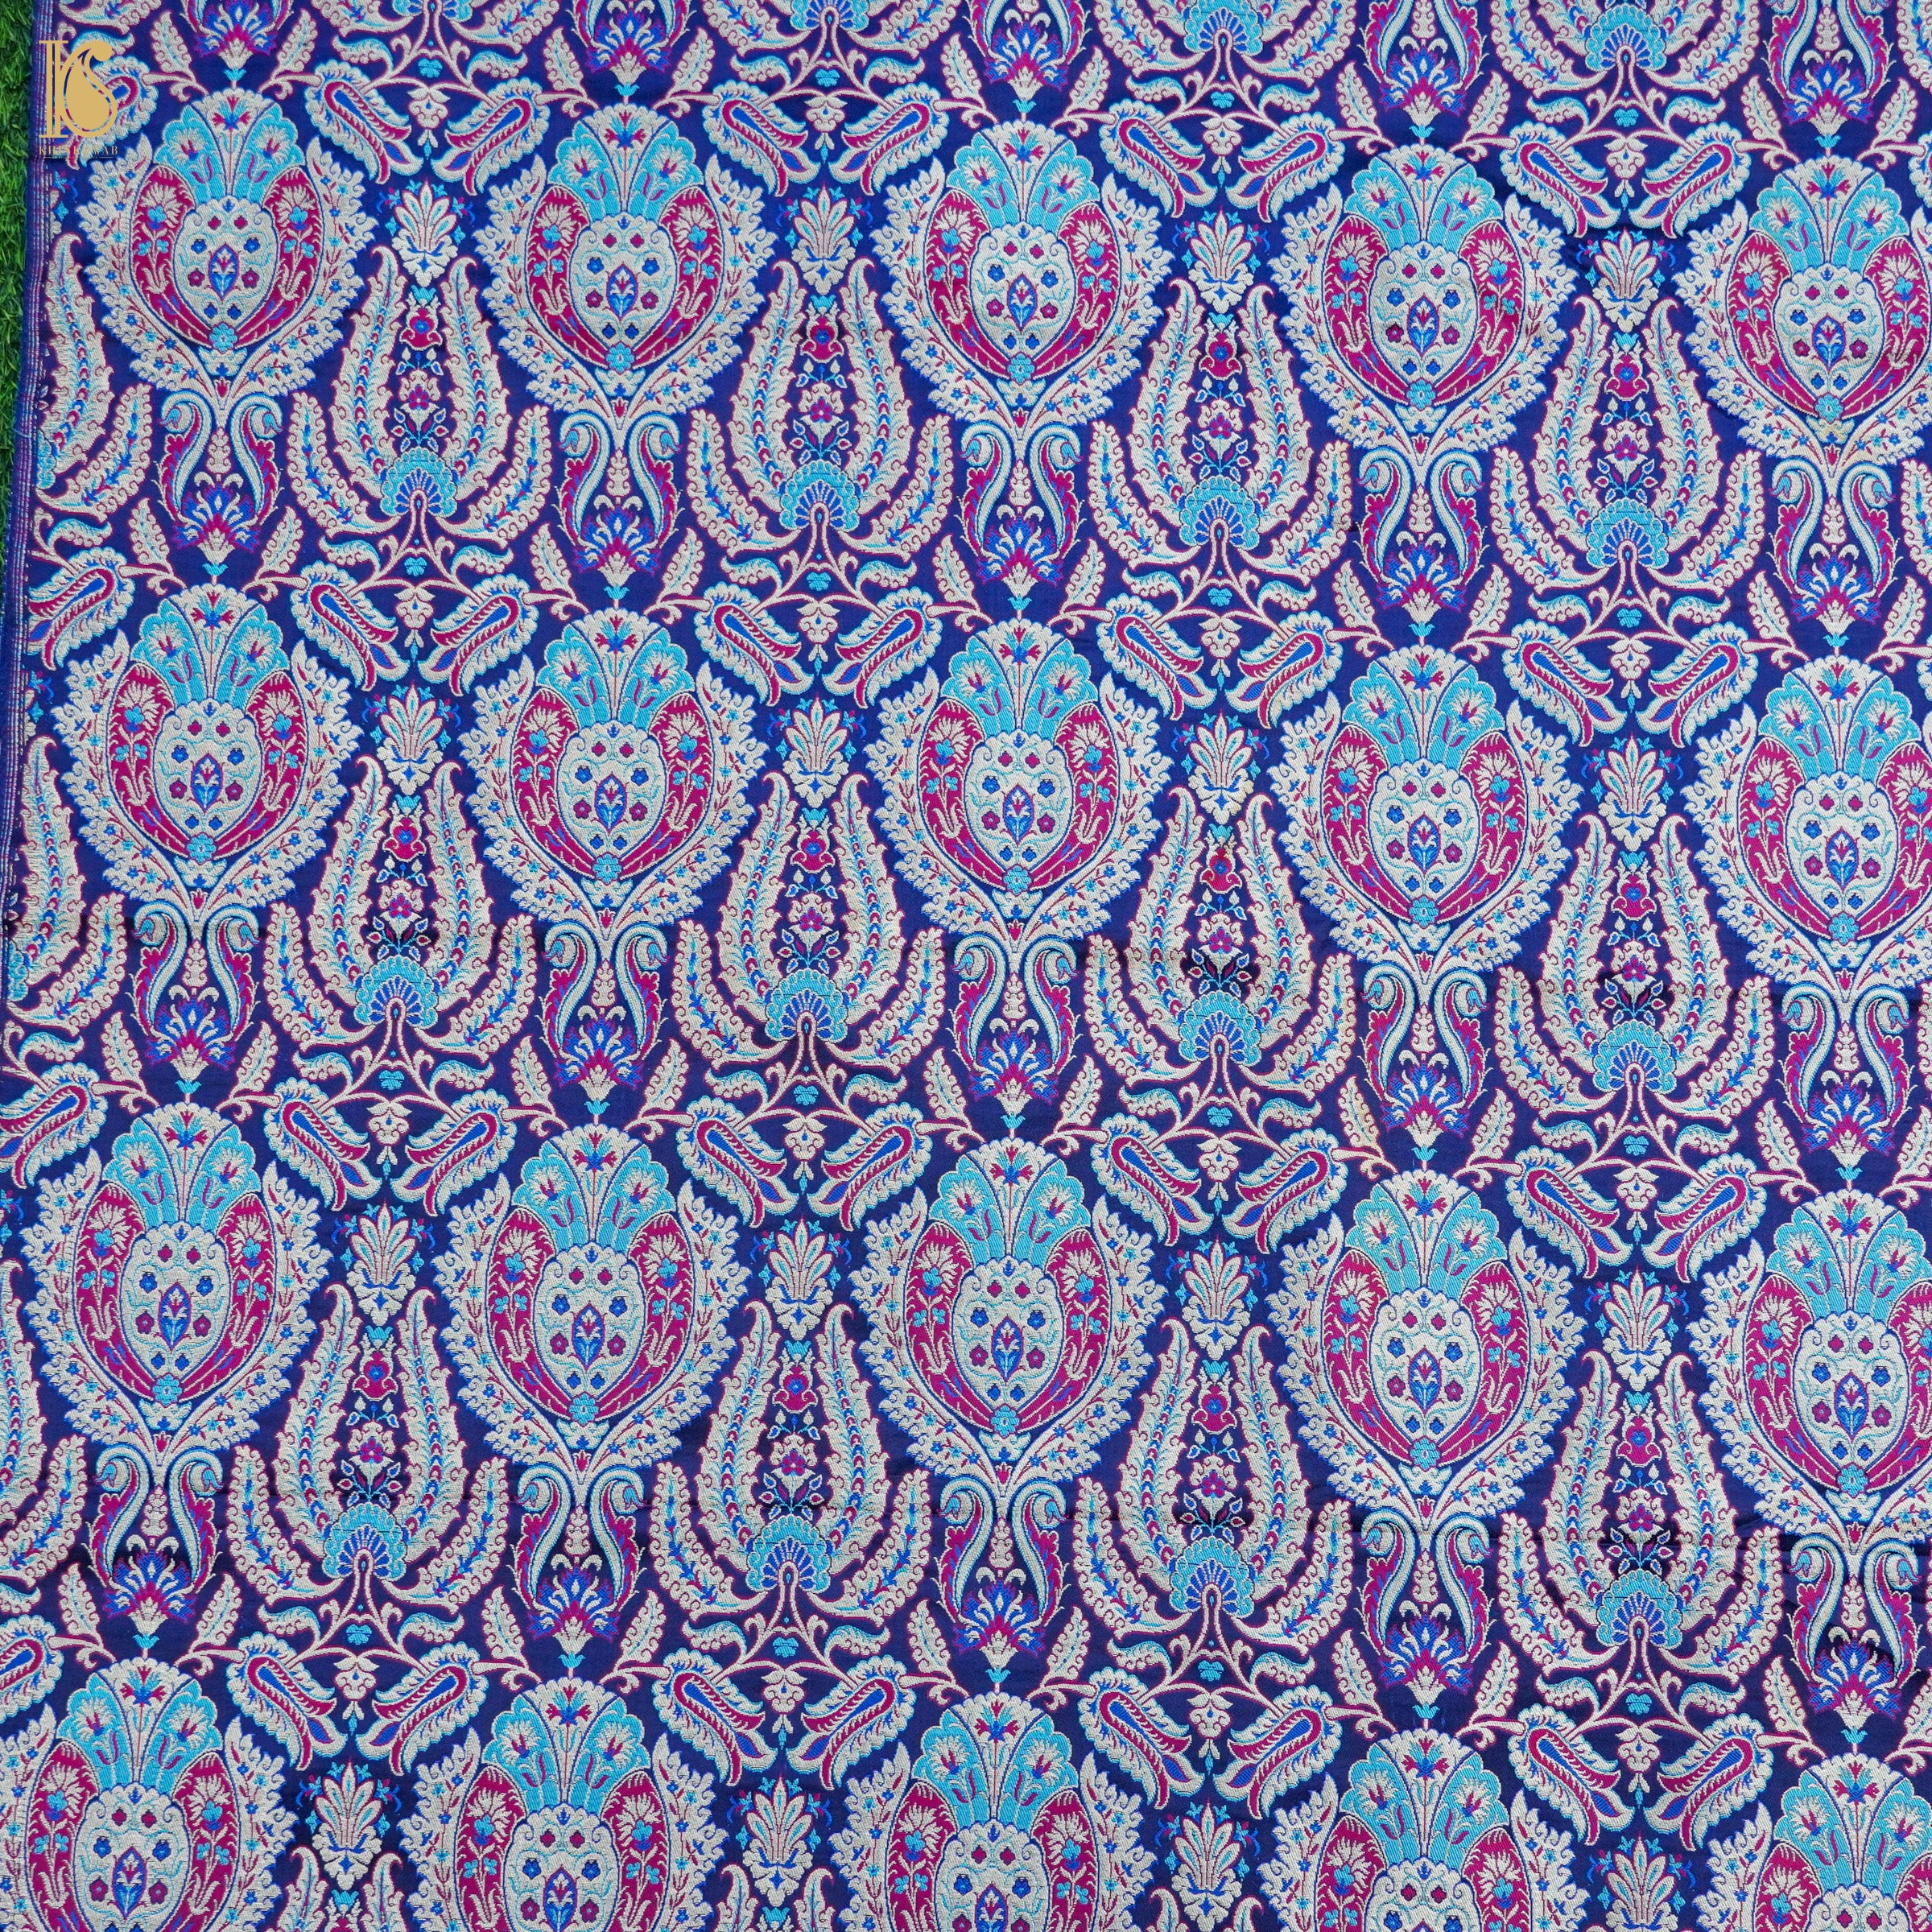 Resolution Blue Kinkhab / Kimkhab Brocade Banarasi Fabric - Khinkhwab